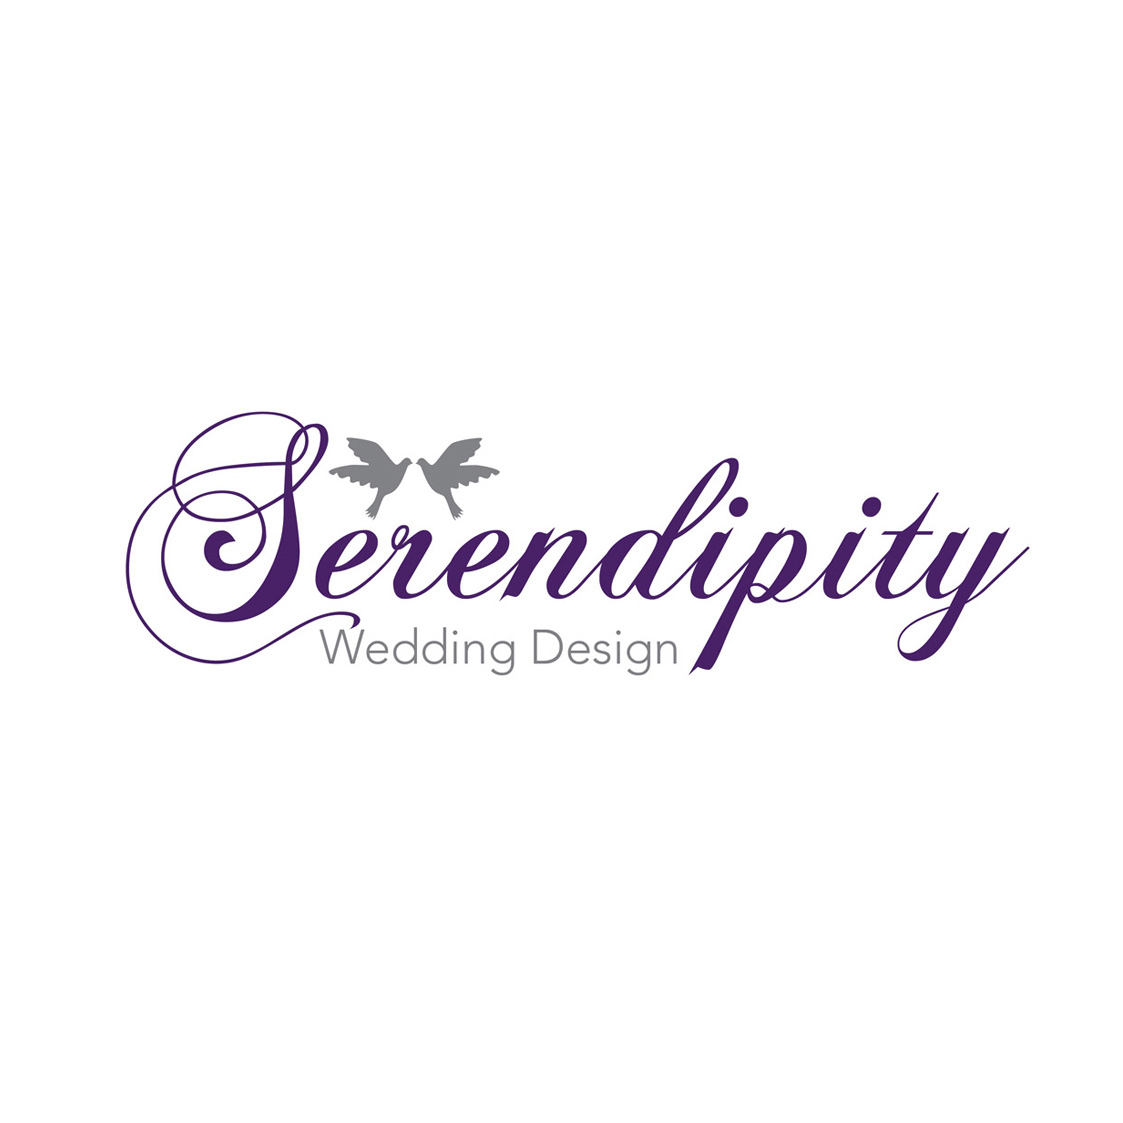 Serendipity Logo - Wedding stationary by Serendipity Wedding Design in Stourbridge ...